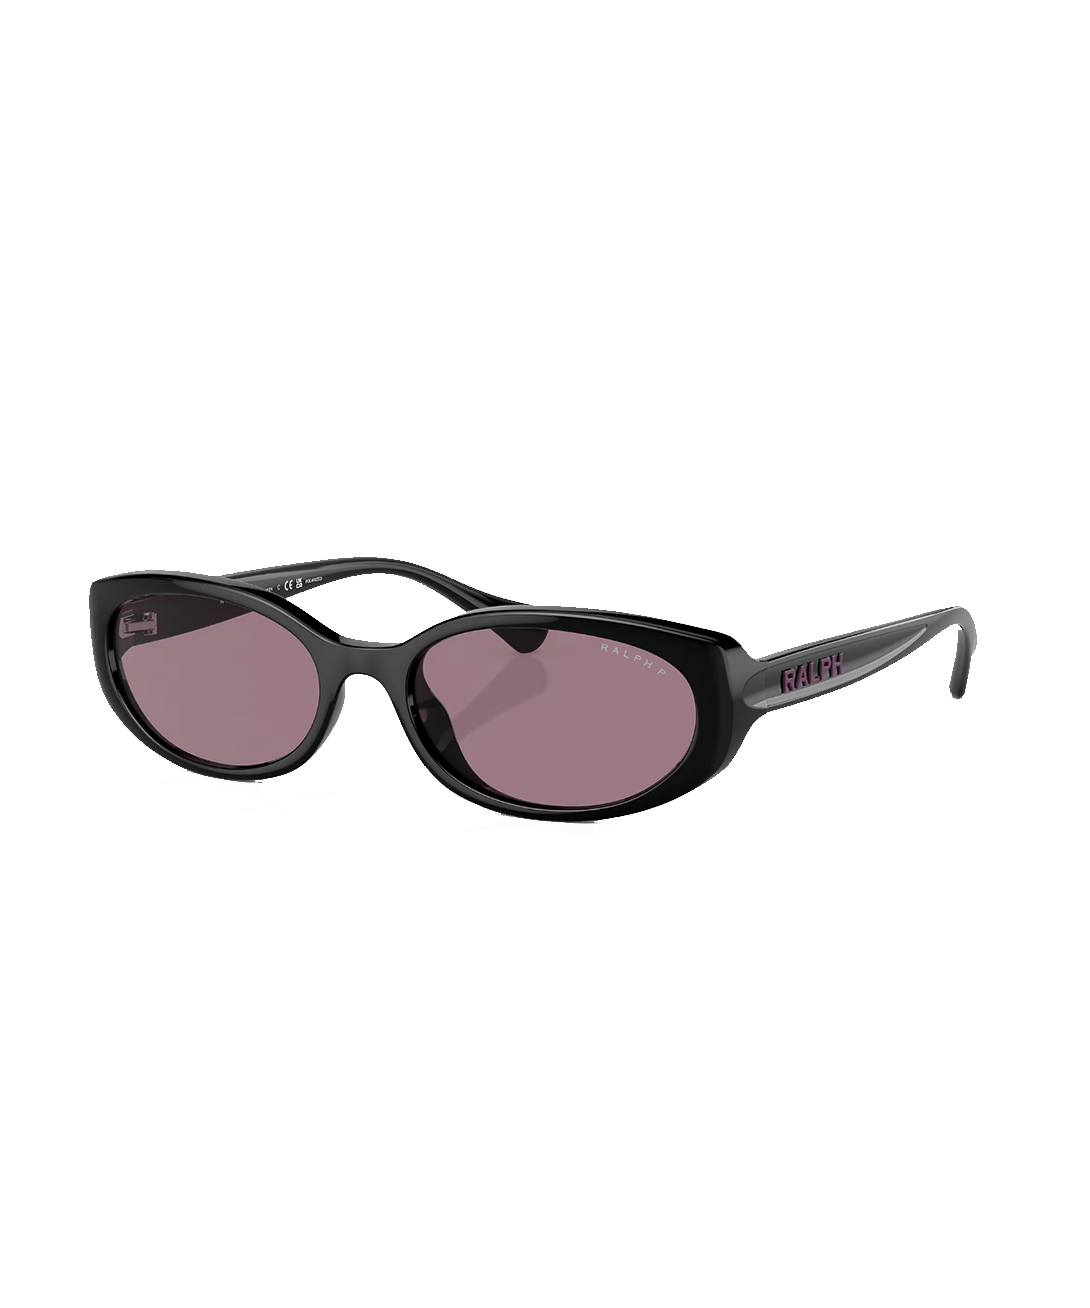 Vogue Eyewear x Gigi Hadid - Pink Cateye Sunglasses